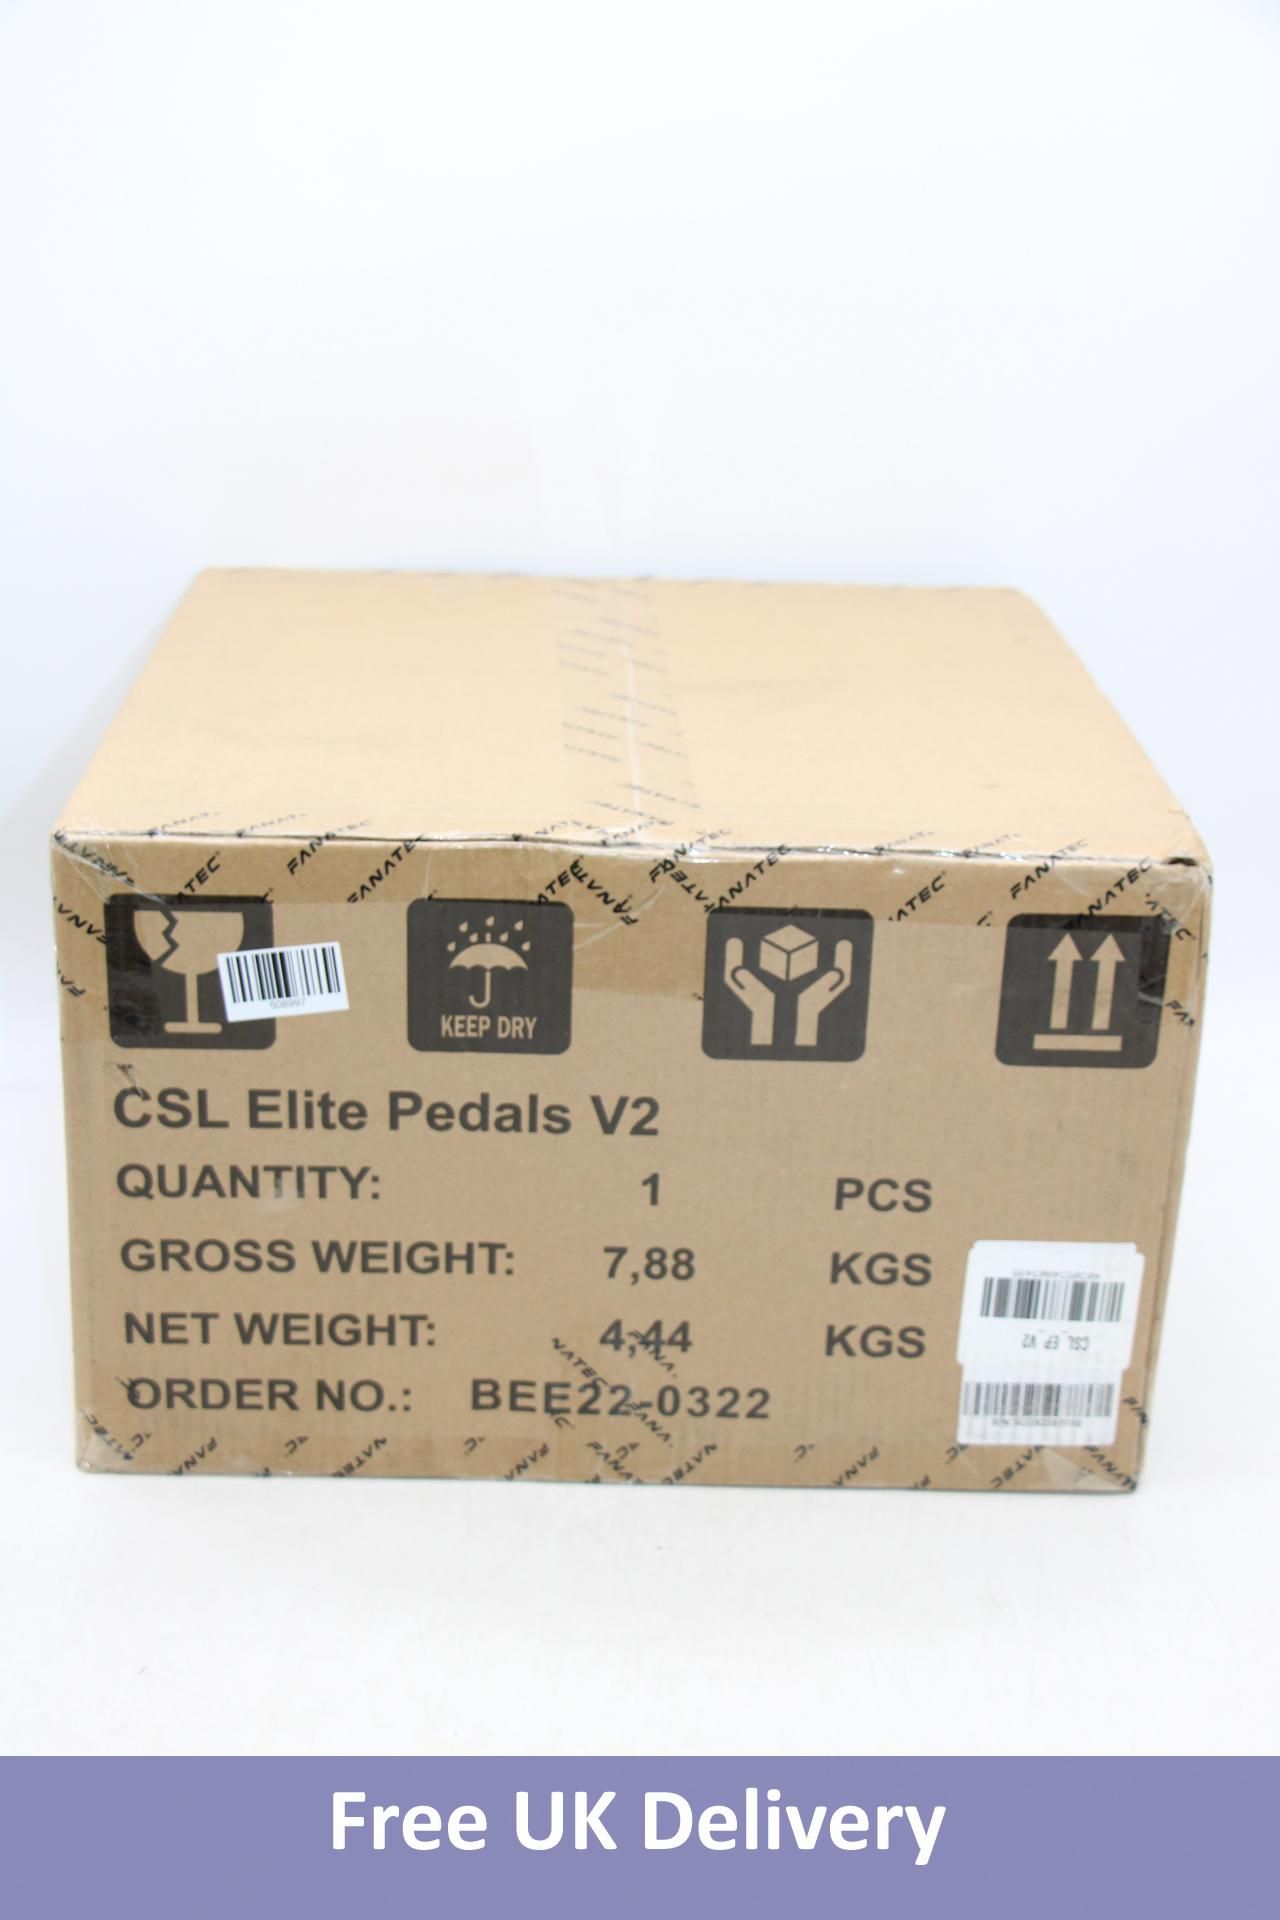 Fanatec CSL Elite Pedals V2. Box damaged